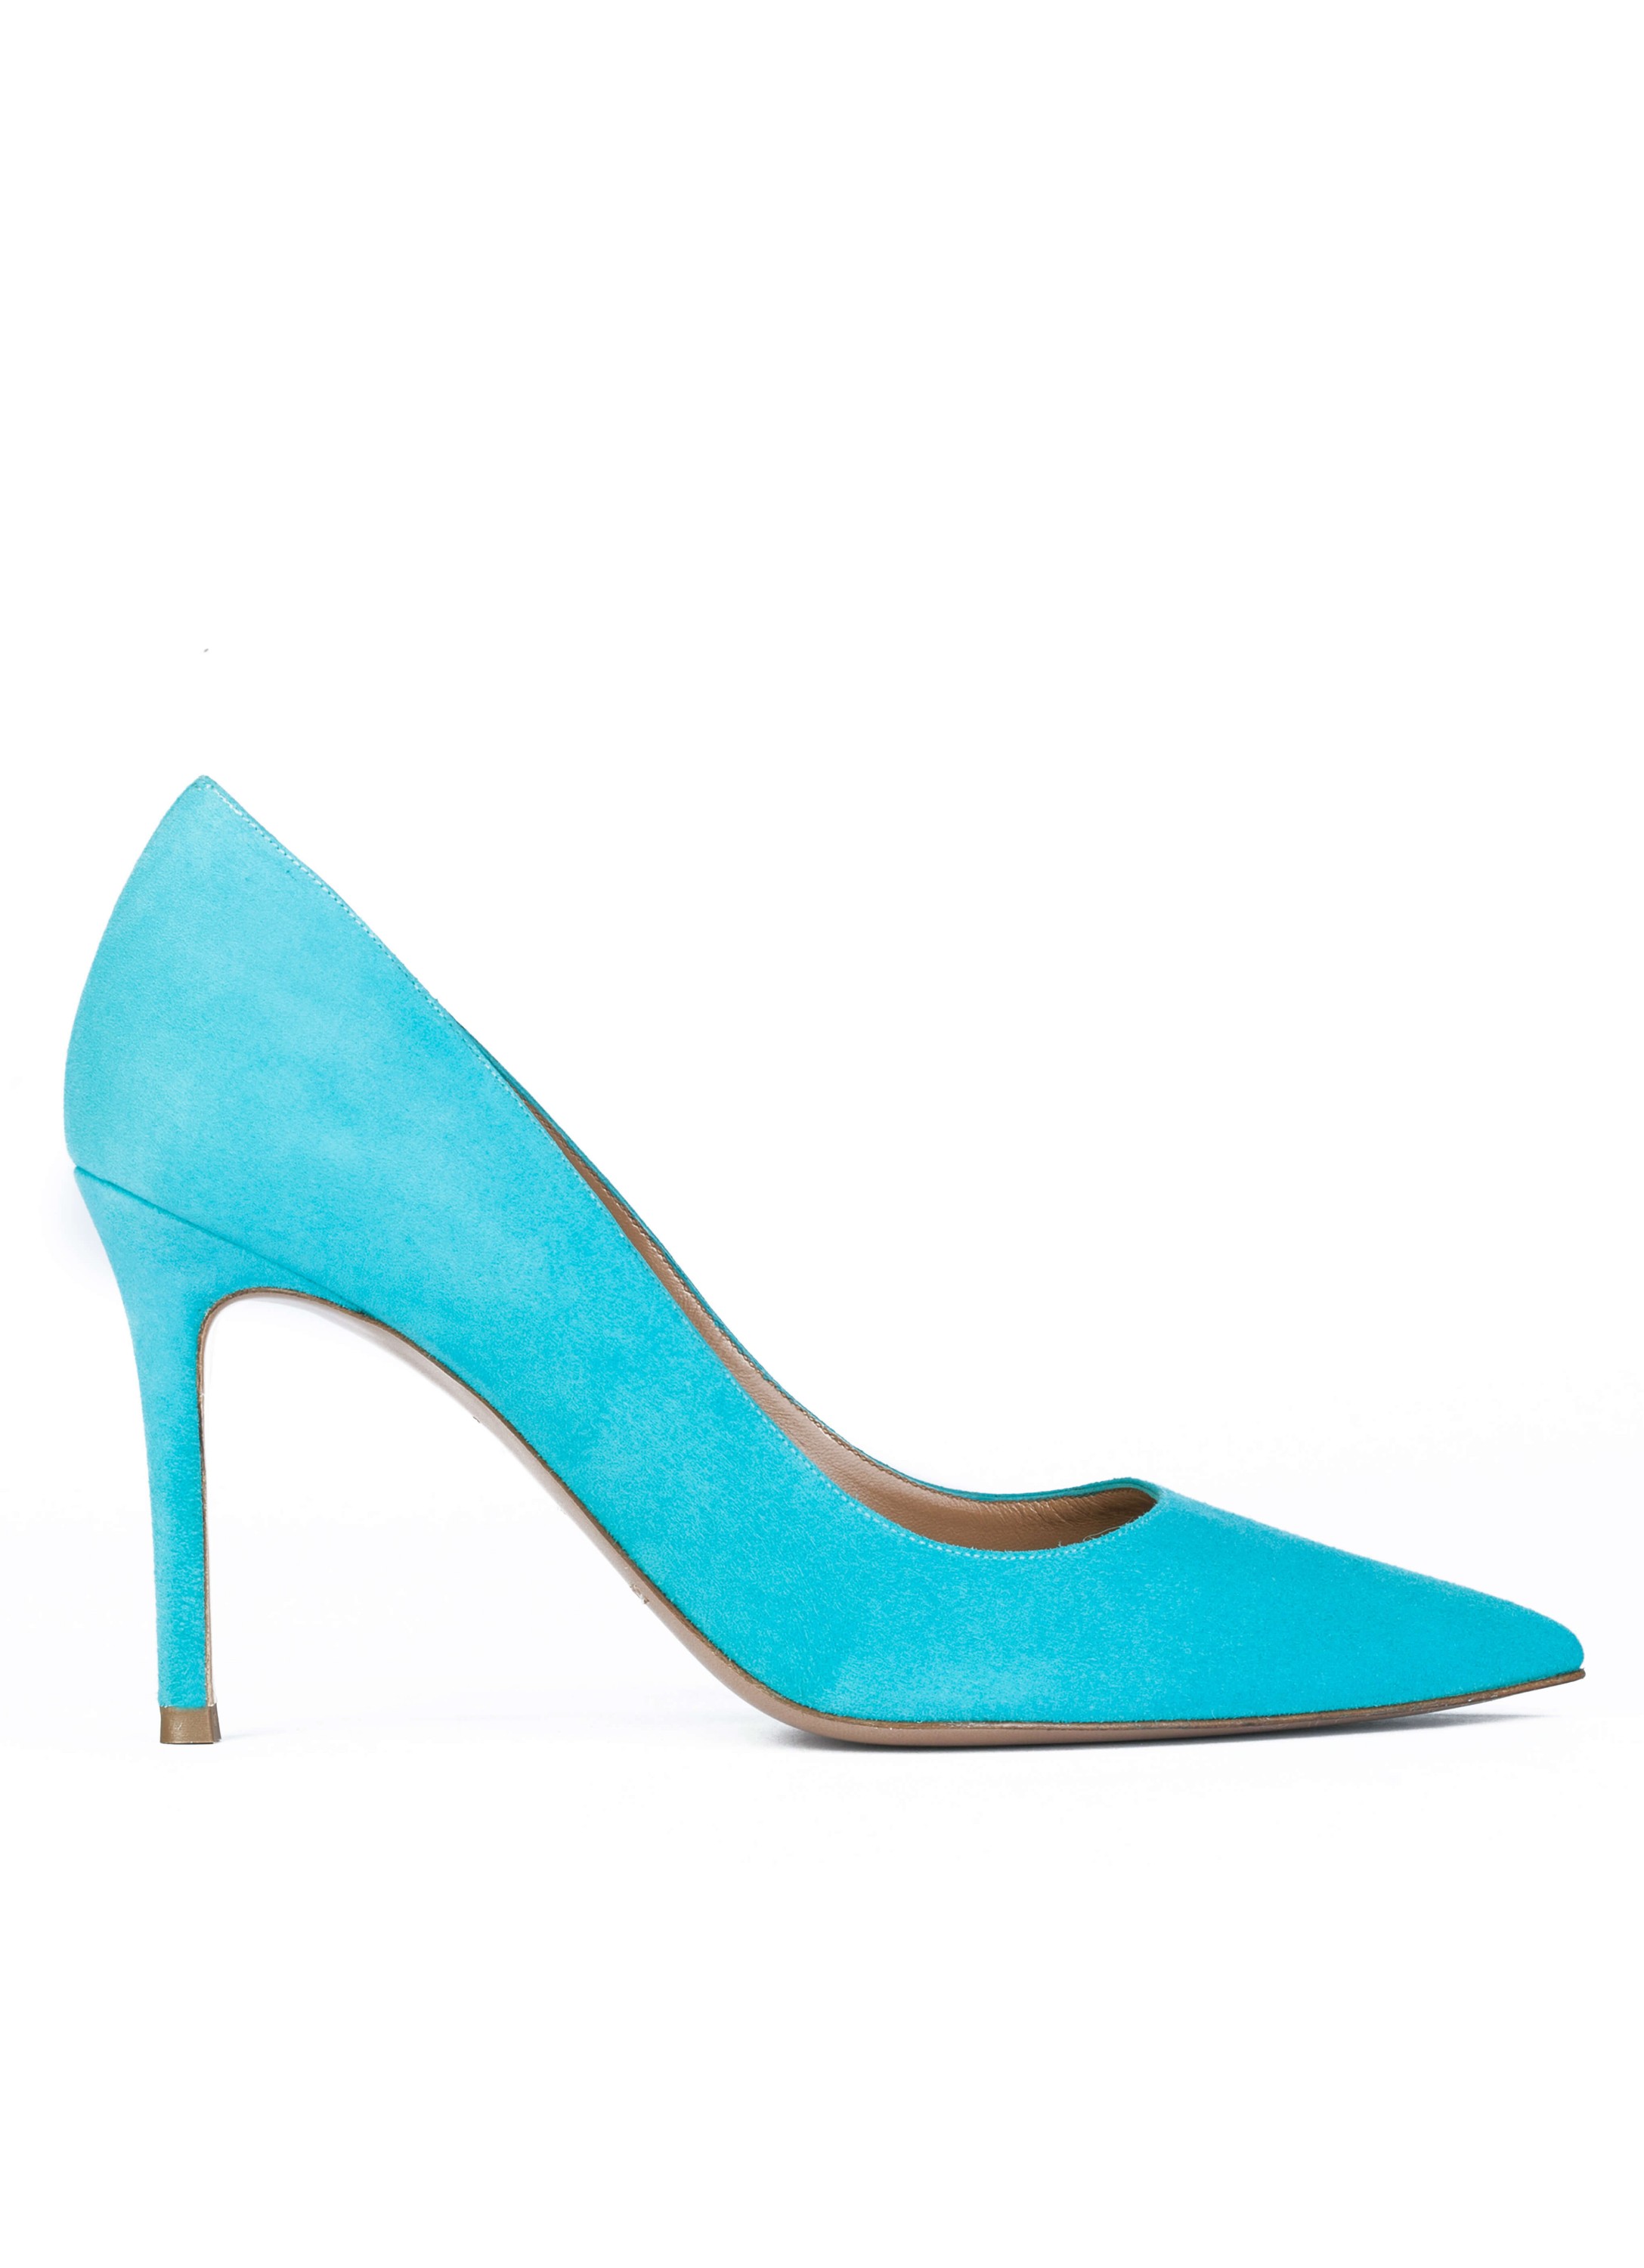 High heel pumps in turquoise suede - online shoe store Pura Lopez ...